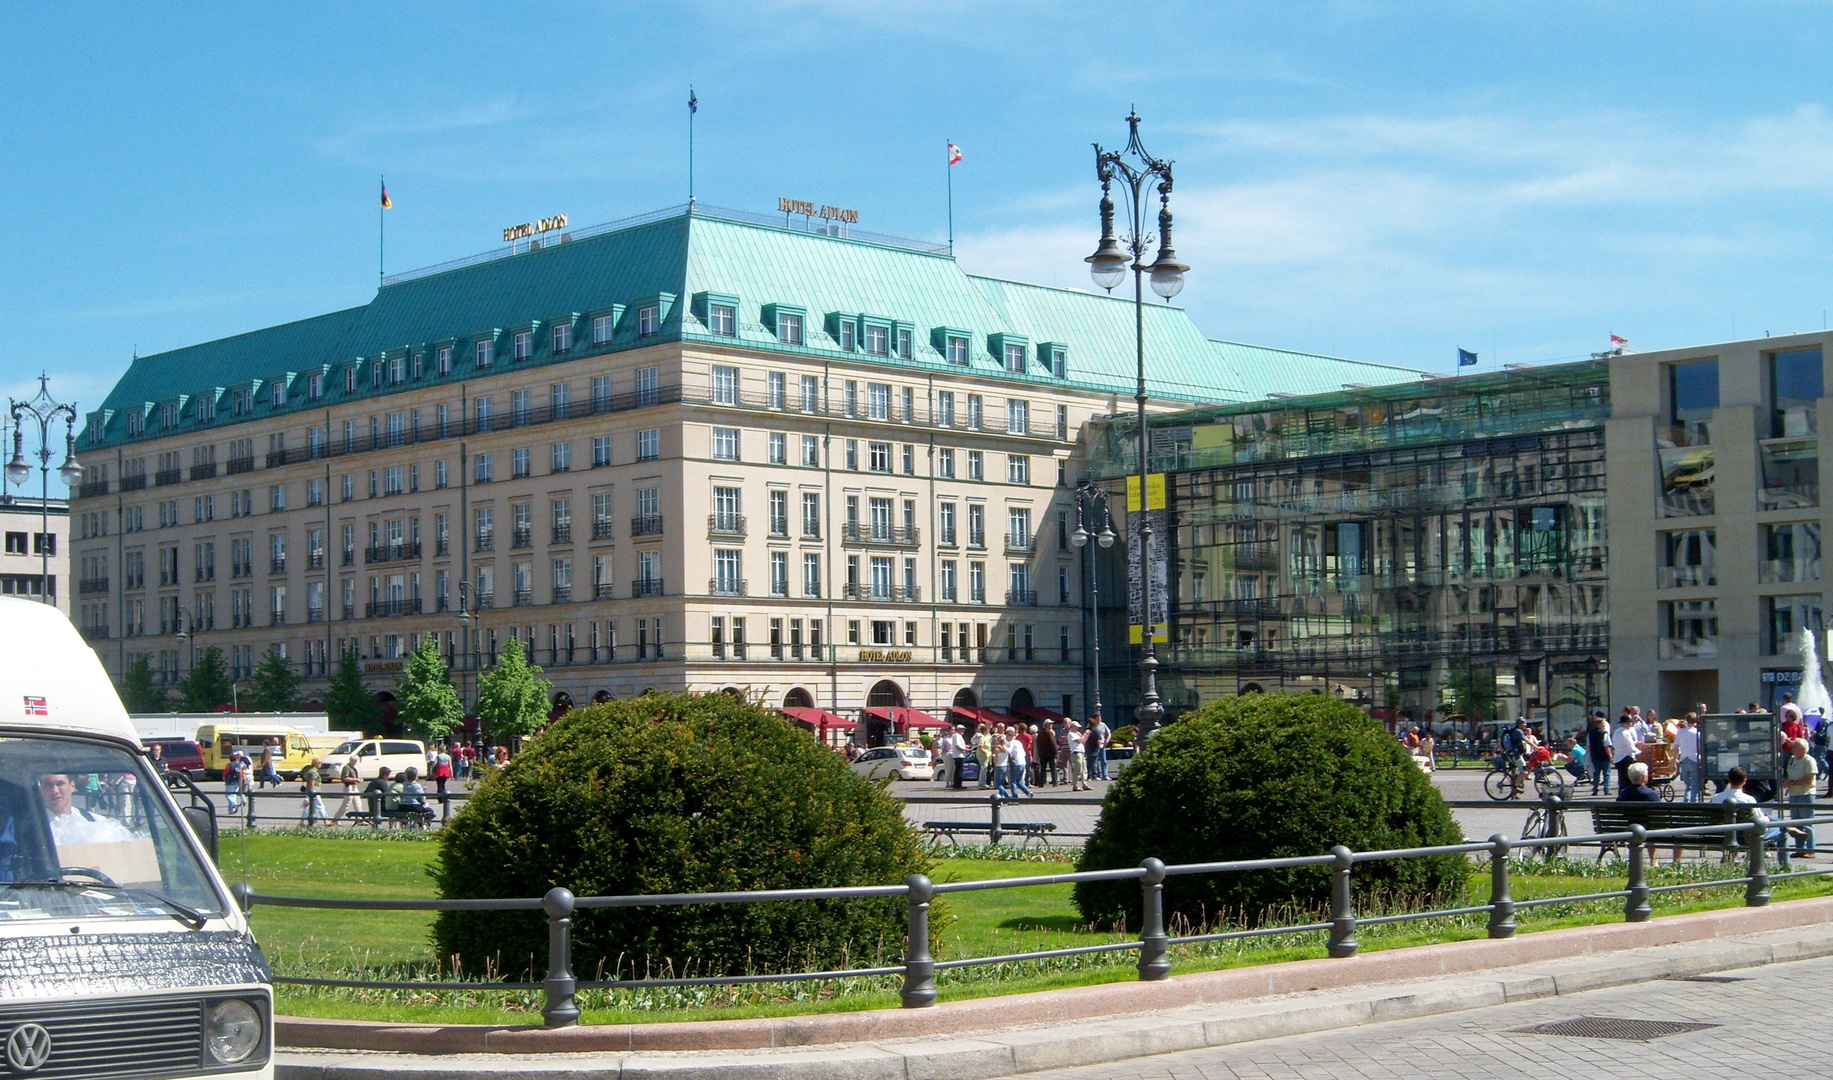 das Hotel Adlon Kempinski